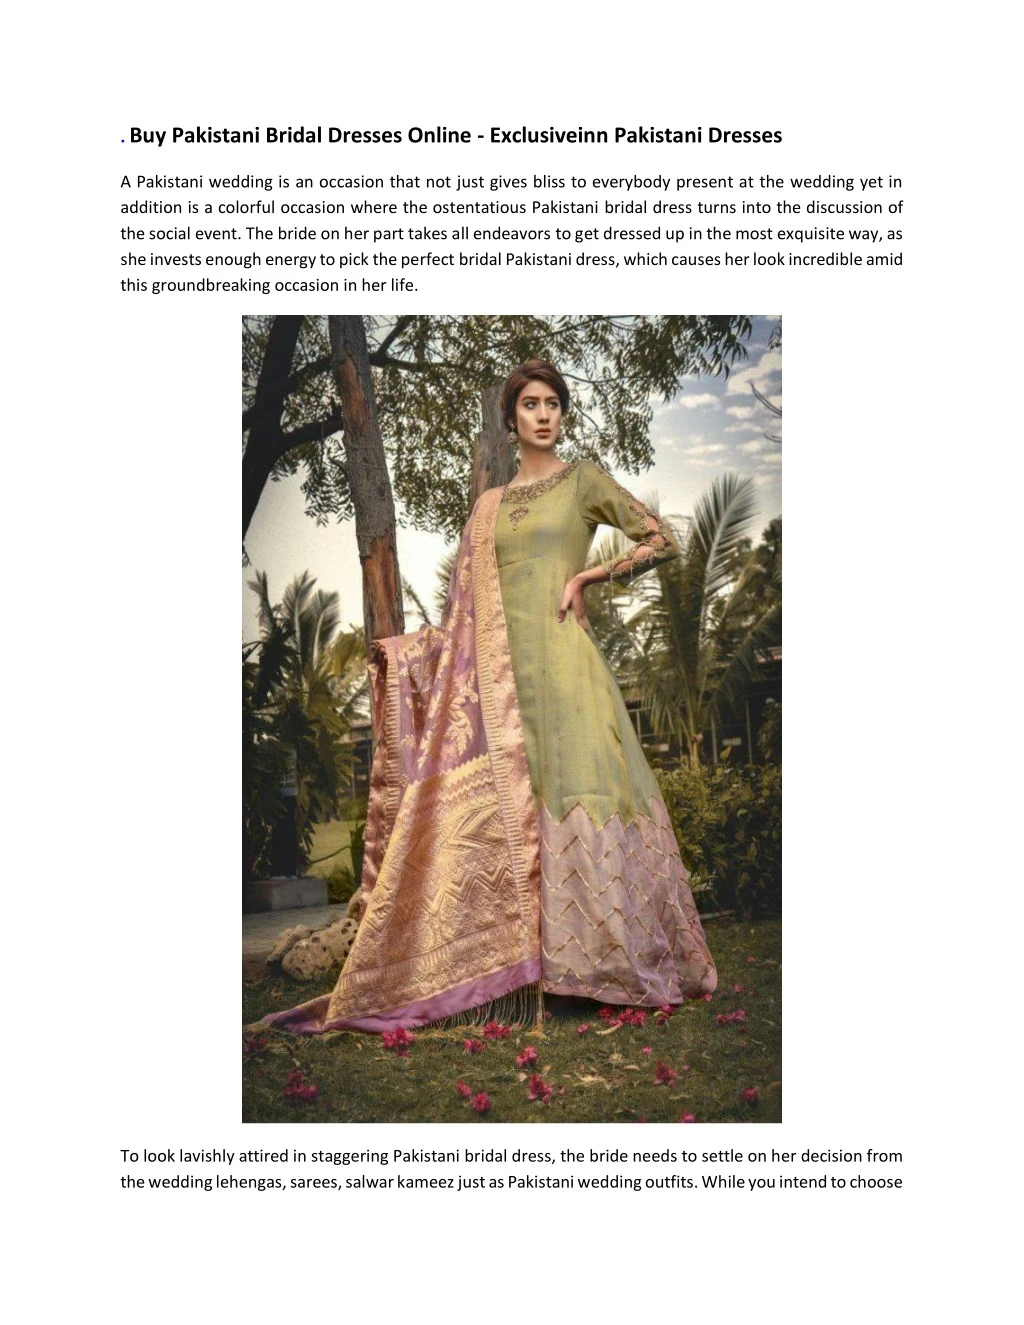 buy pakistani bridal dresses online exclusiveinn